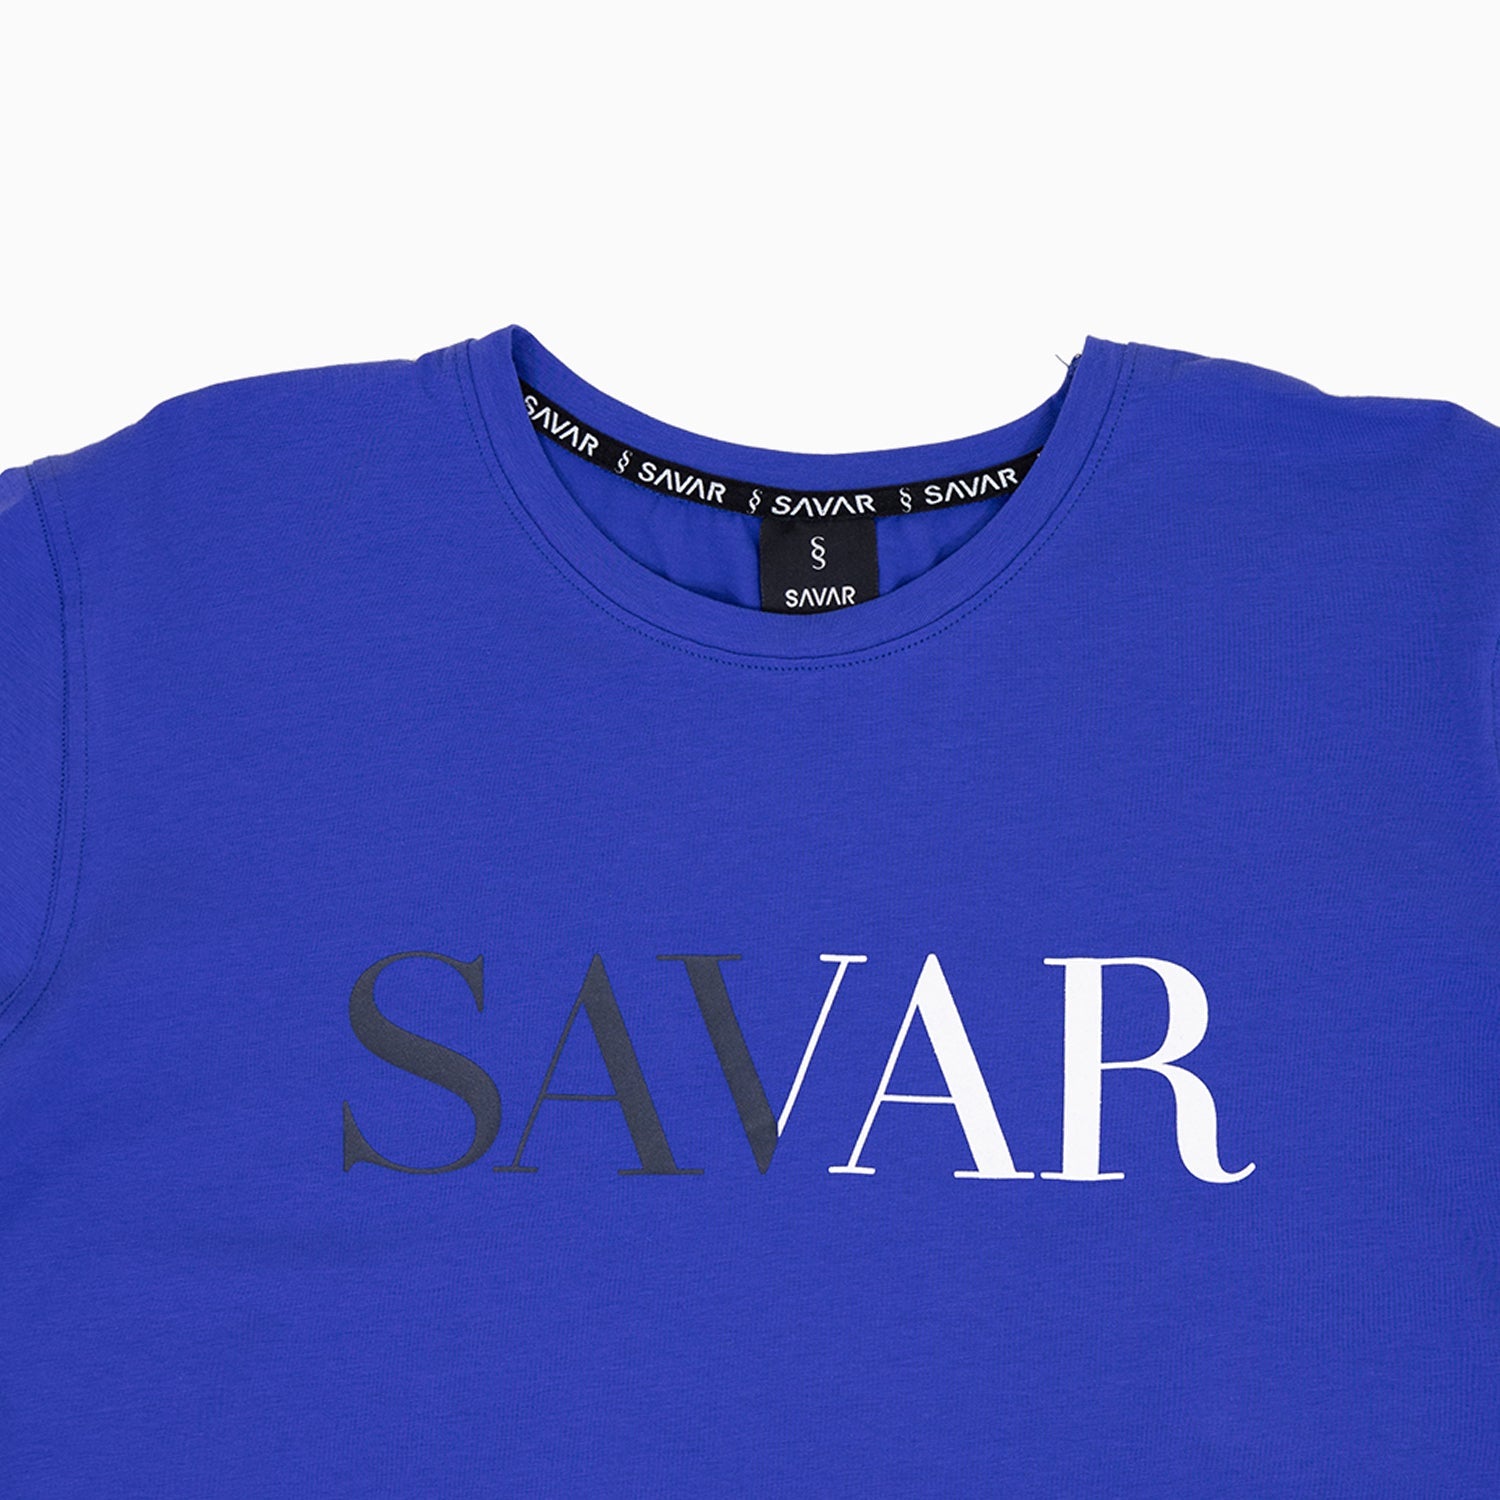 savar-mens-black-white-valentino-logo-printed-purple-t-shirt-st230-480